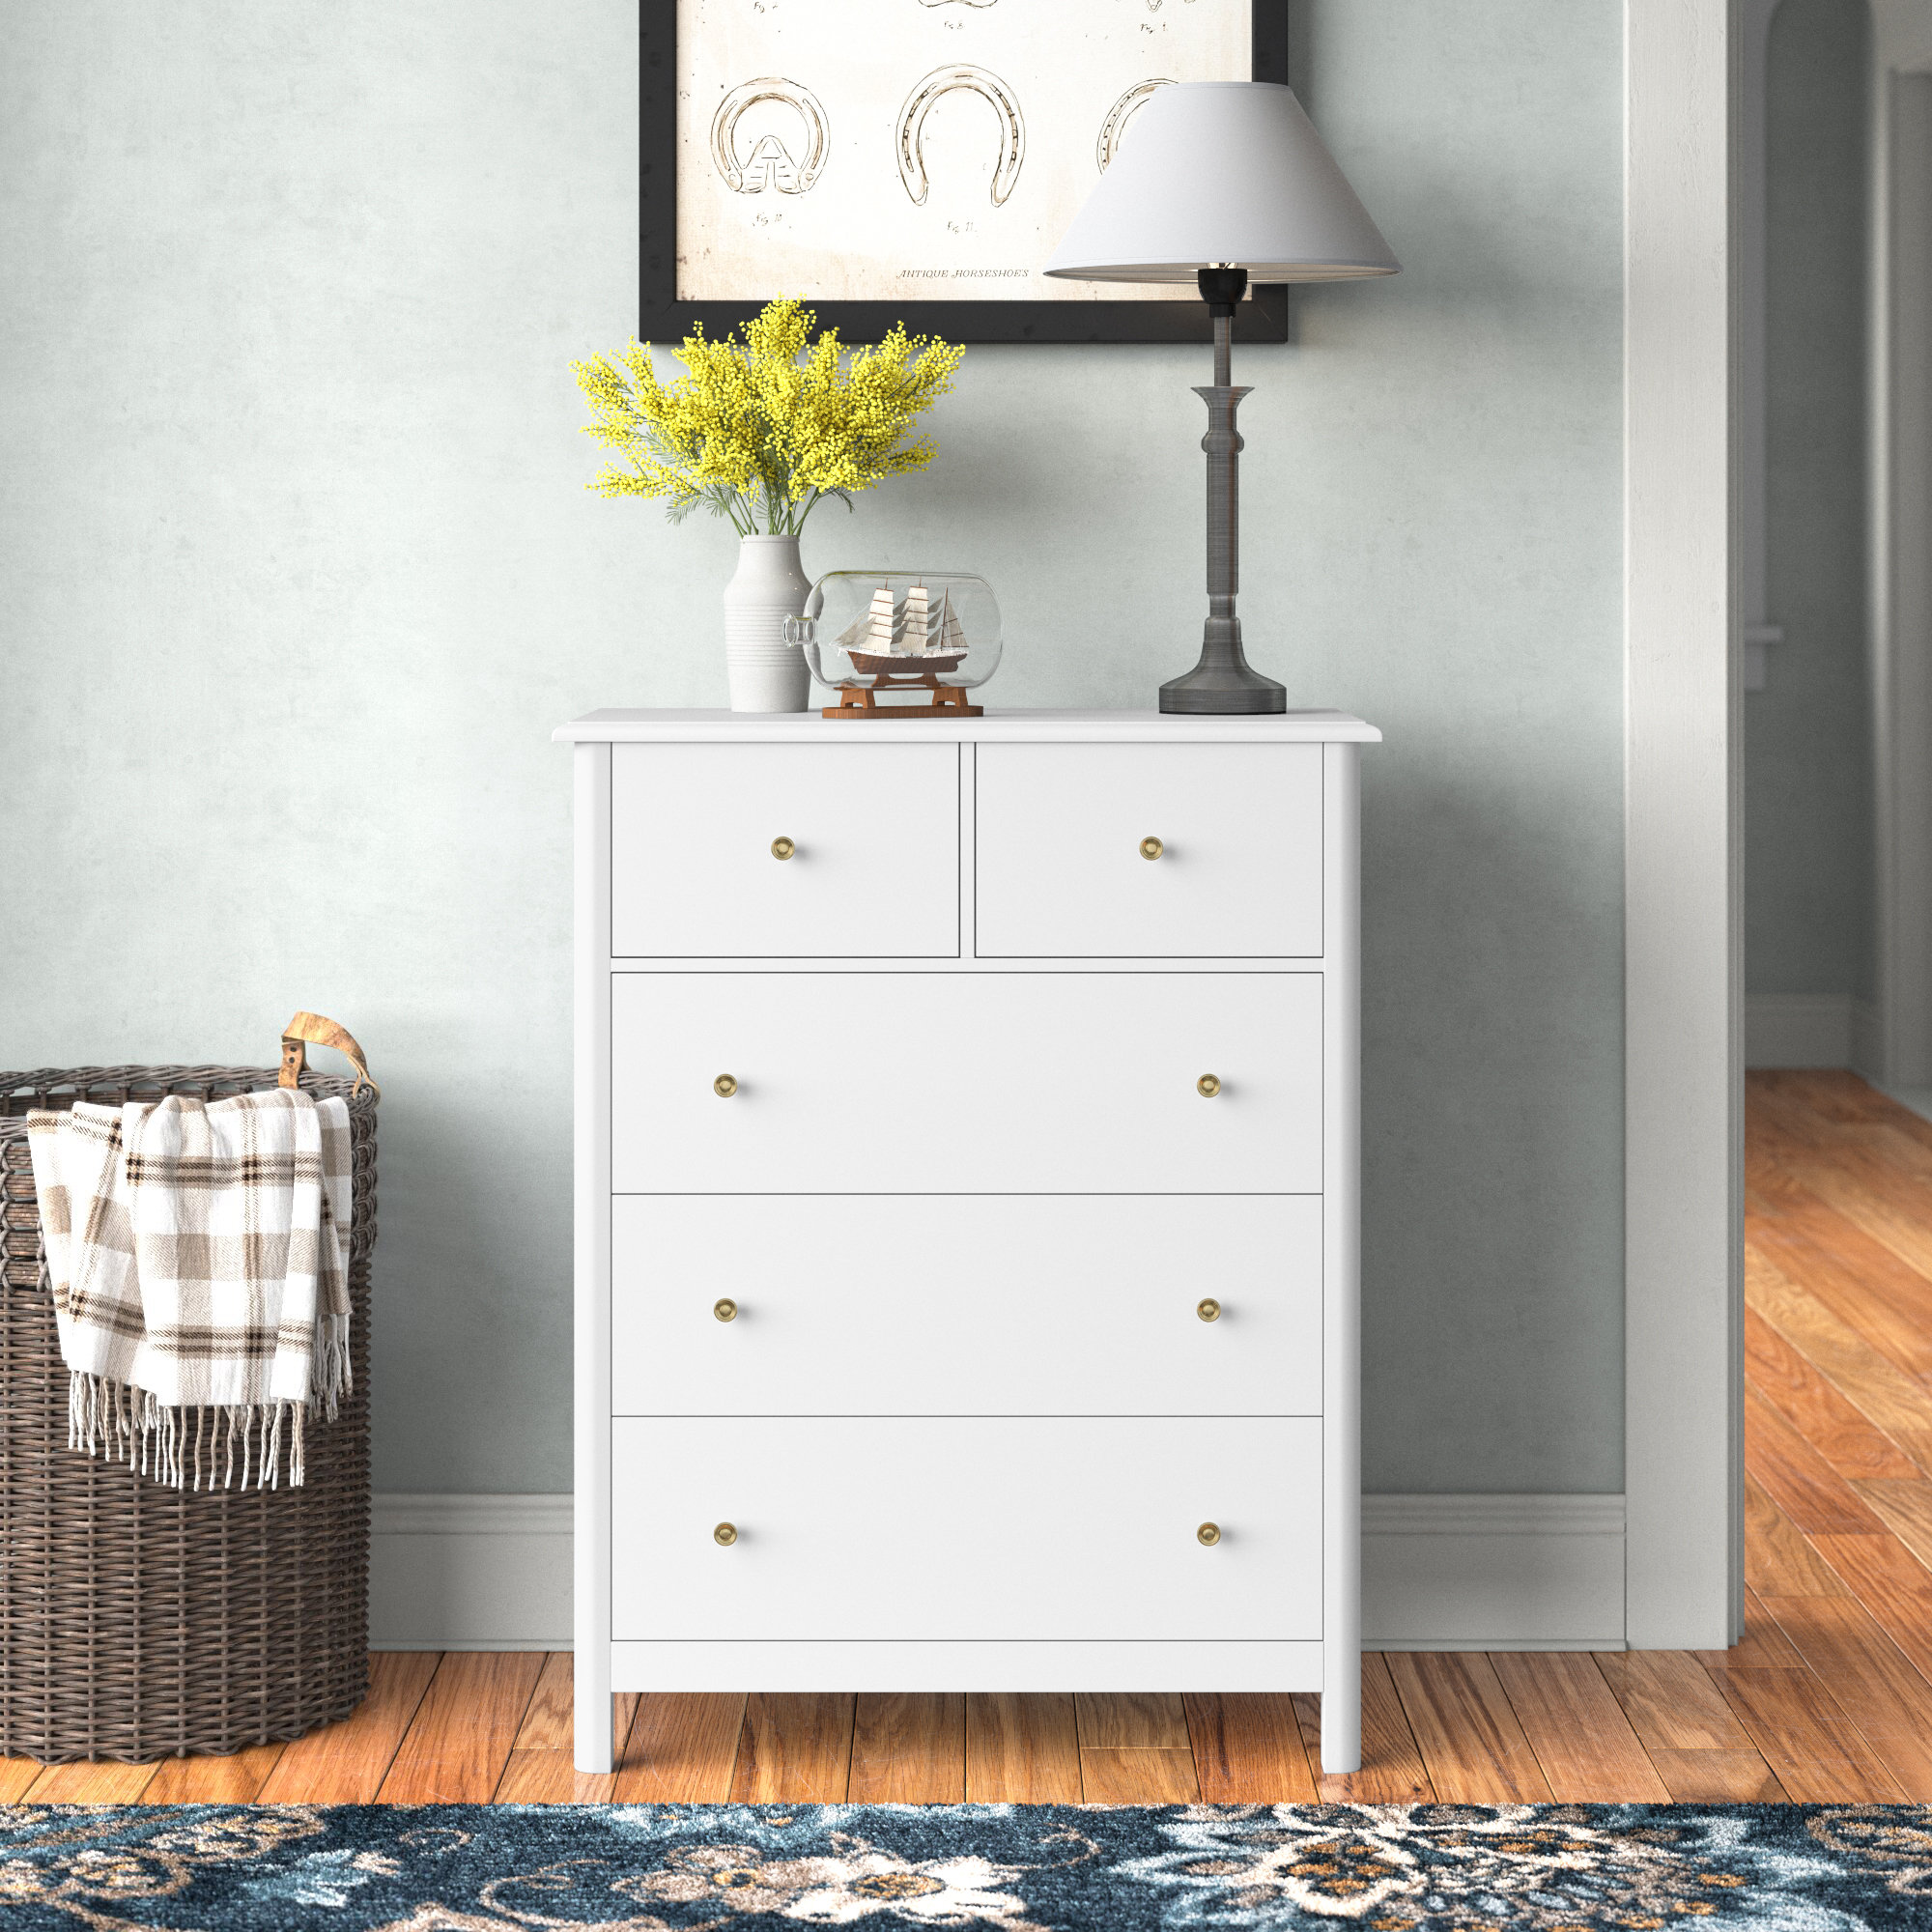 4 Drawer Dresser Bedroom Storage Bins Furniture Chest Hamper